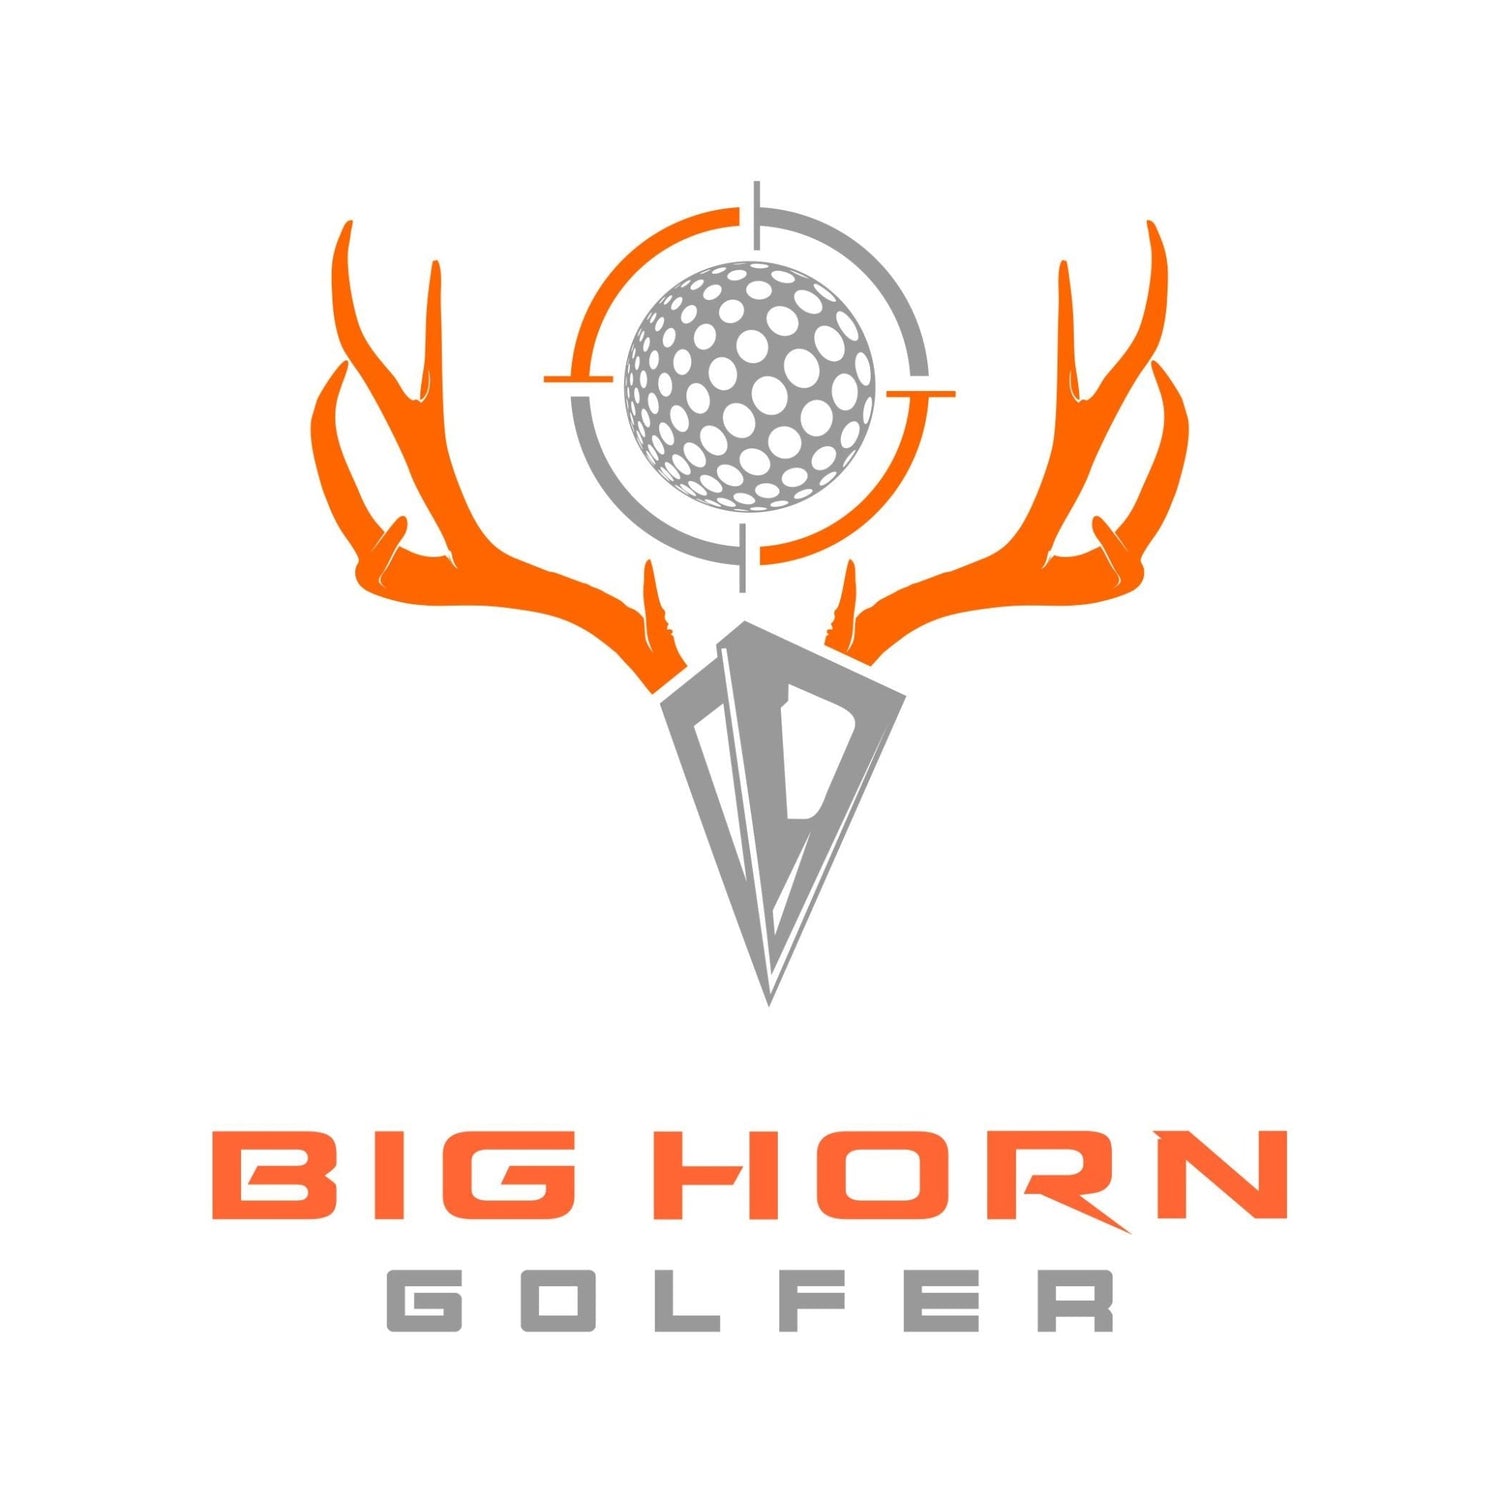 All - Big Horn Golfer